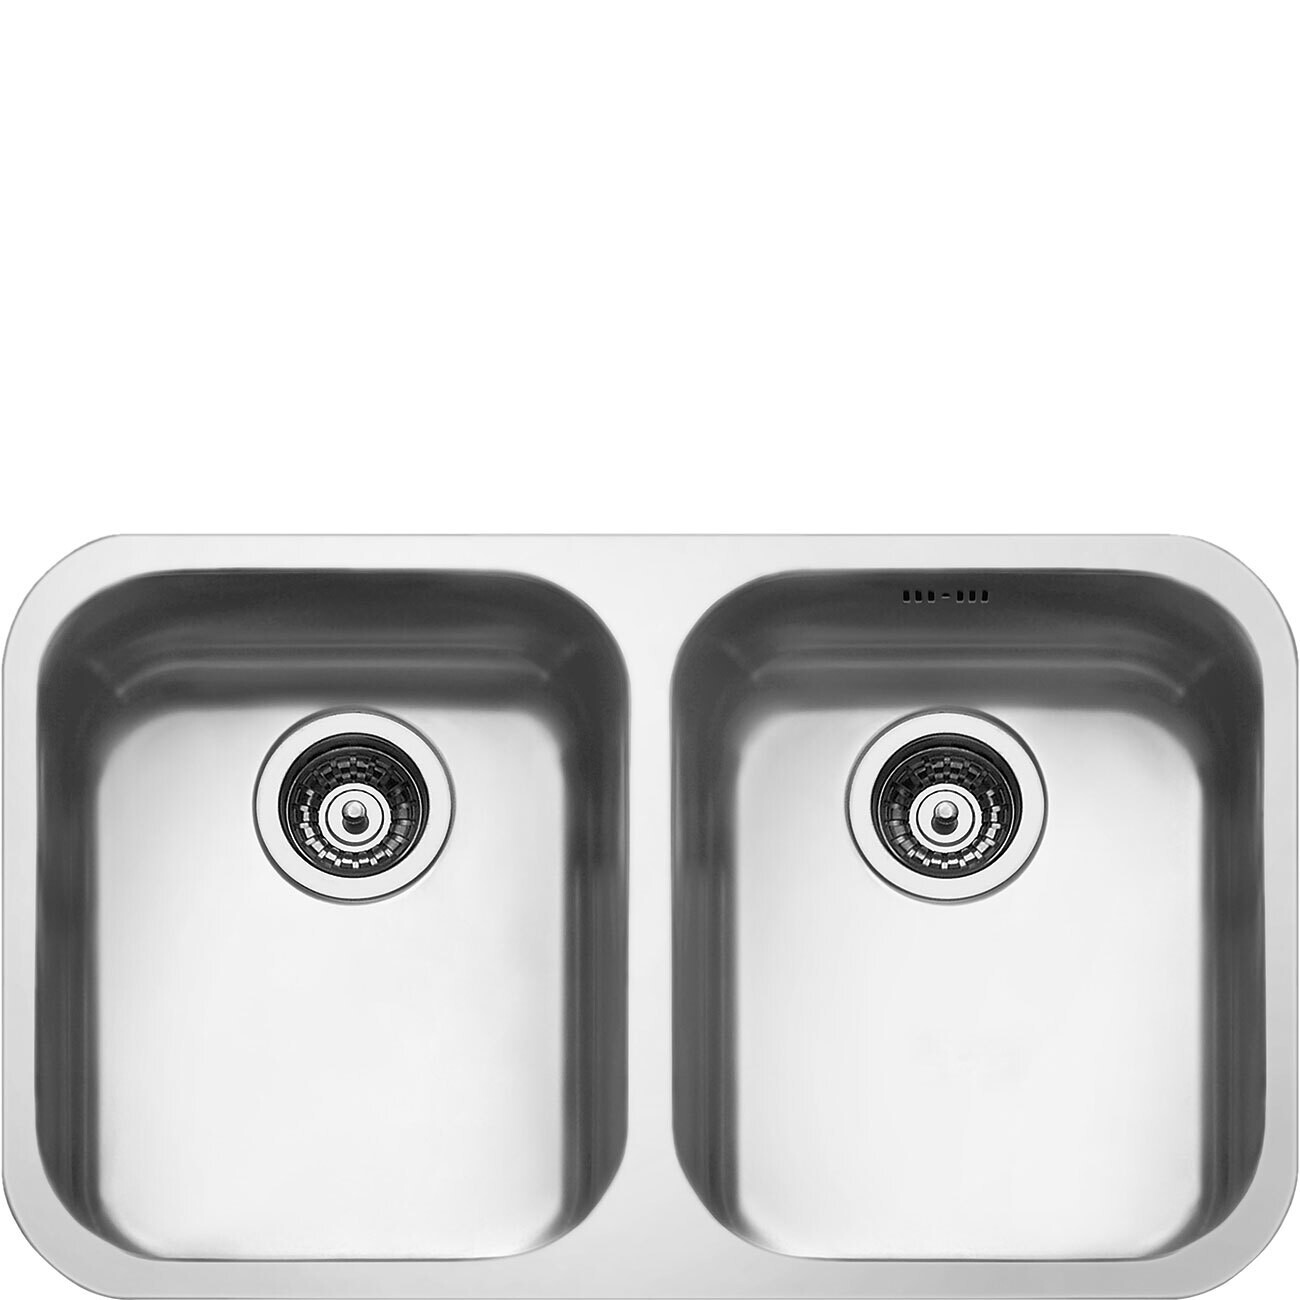 Smeg sink, double bowl, undermount